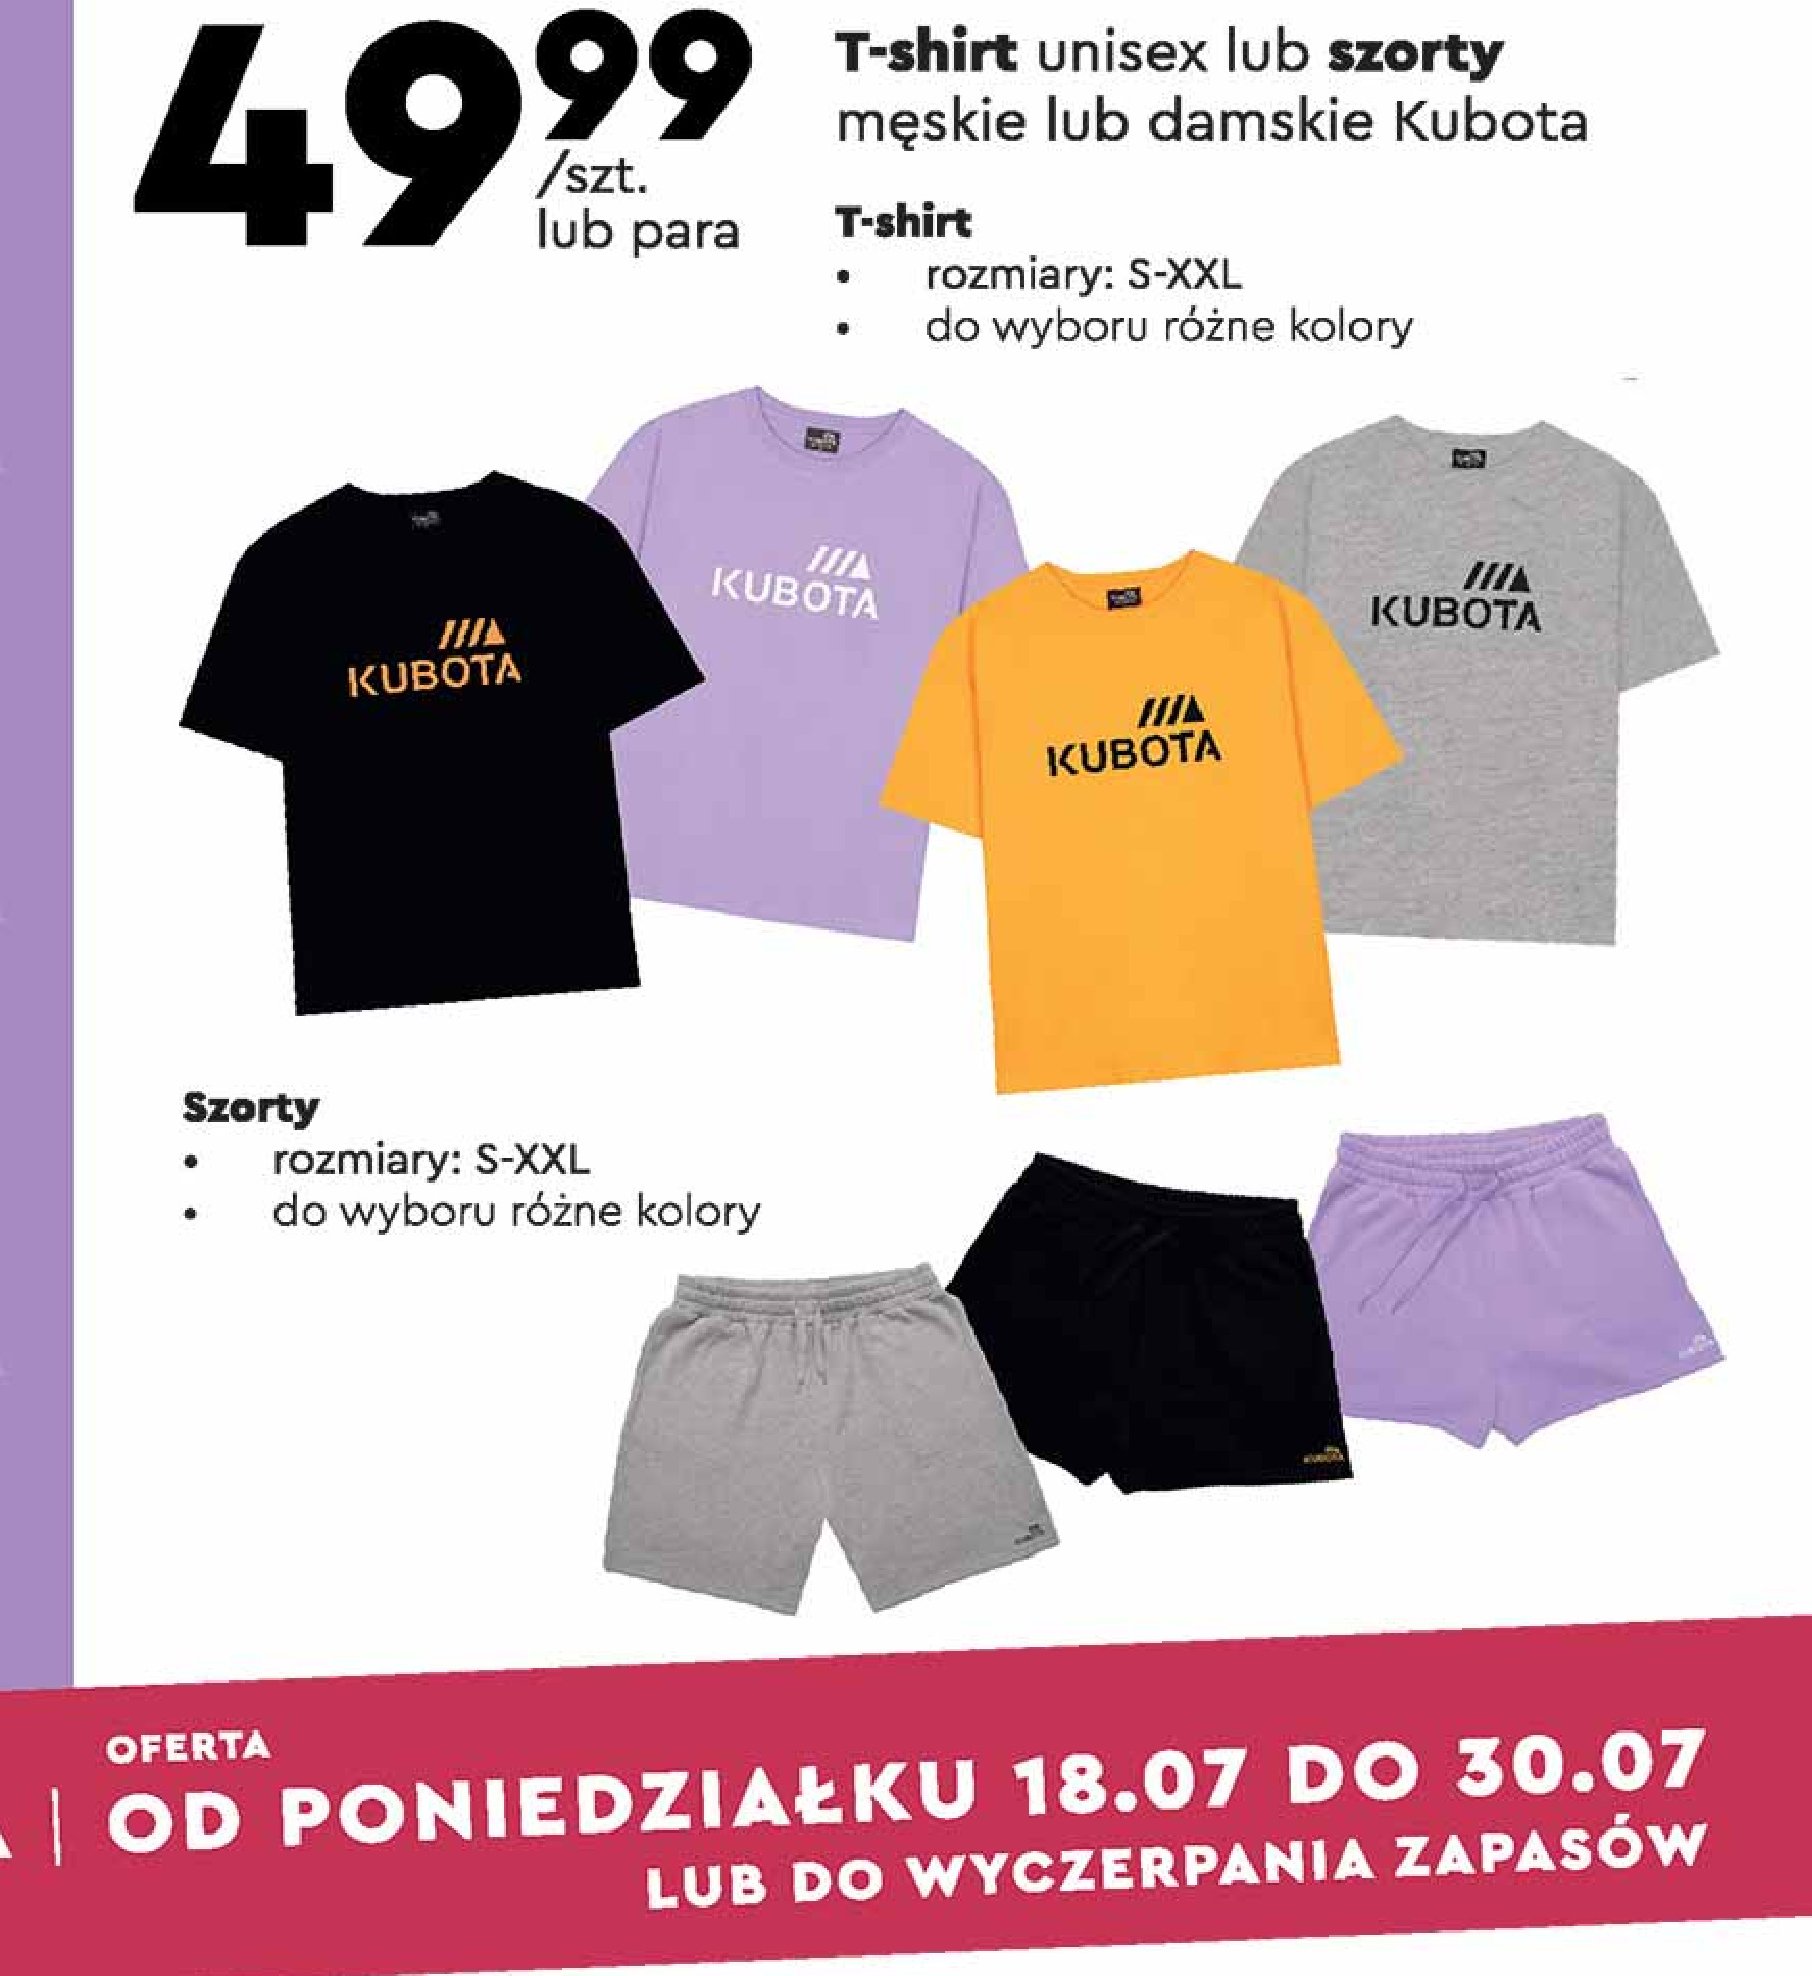 T-shirt unisex s-xxl KUBOTA promocja